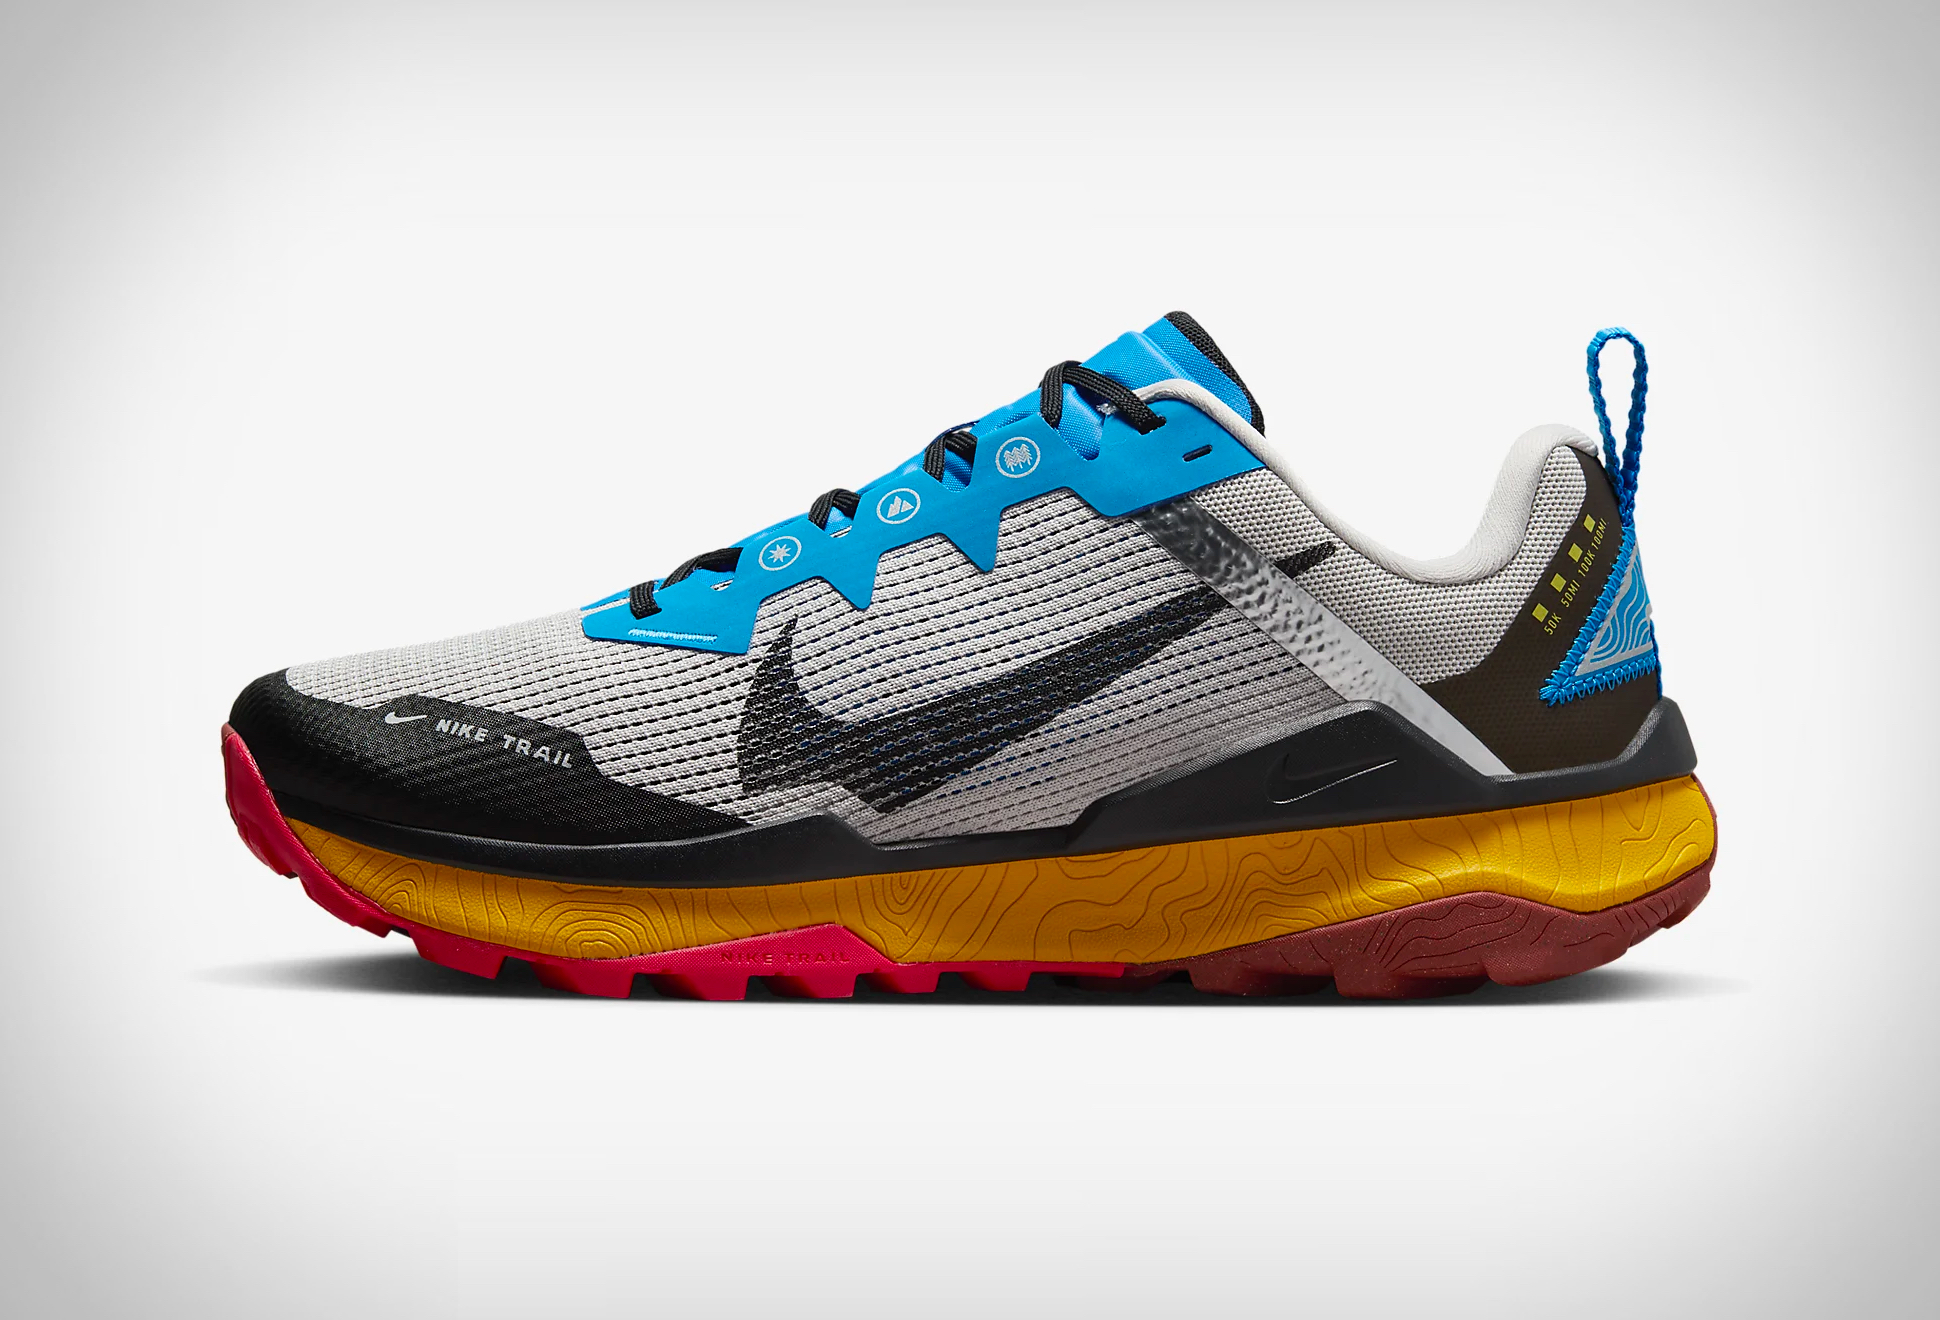 Nike Wildhorse 8 Trail Running Shoes: O Tênis Perfeito Para Trilhas - Image